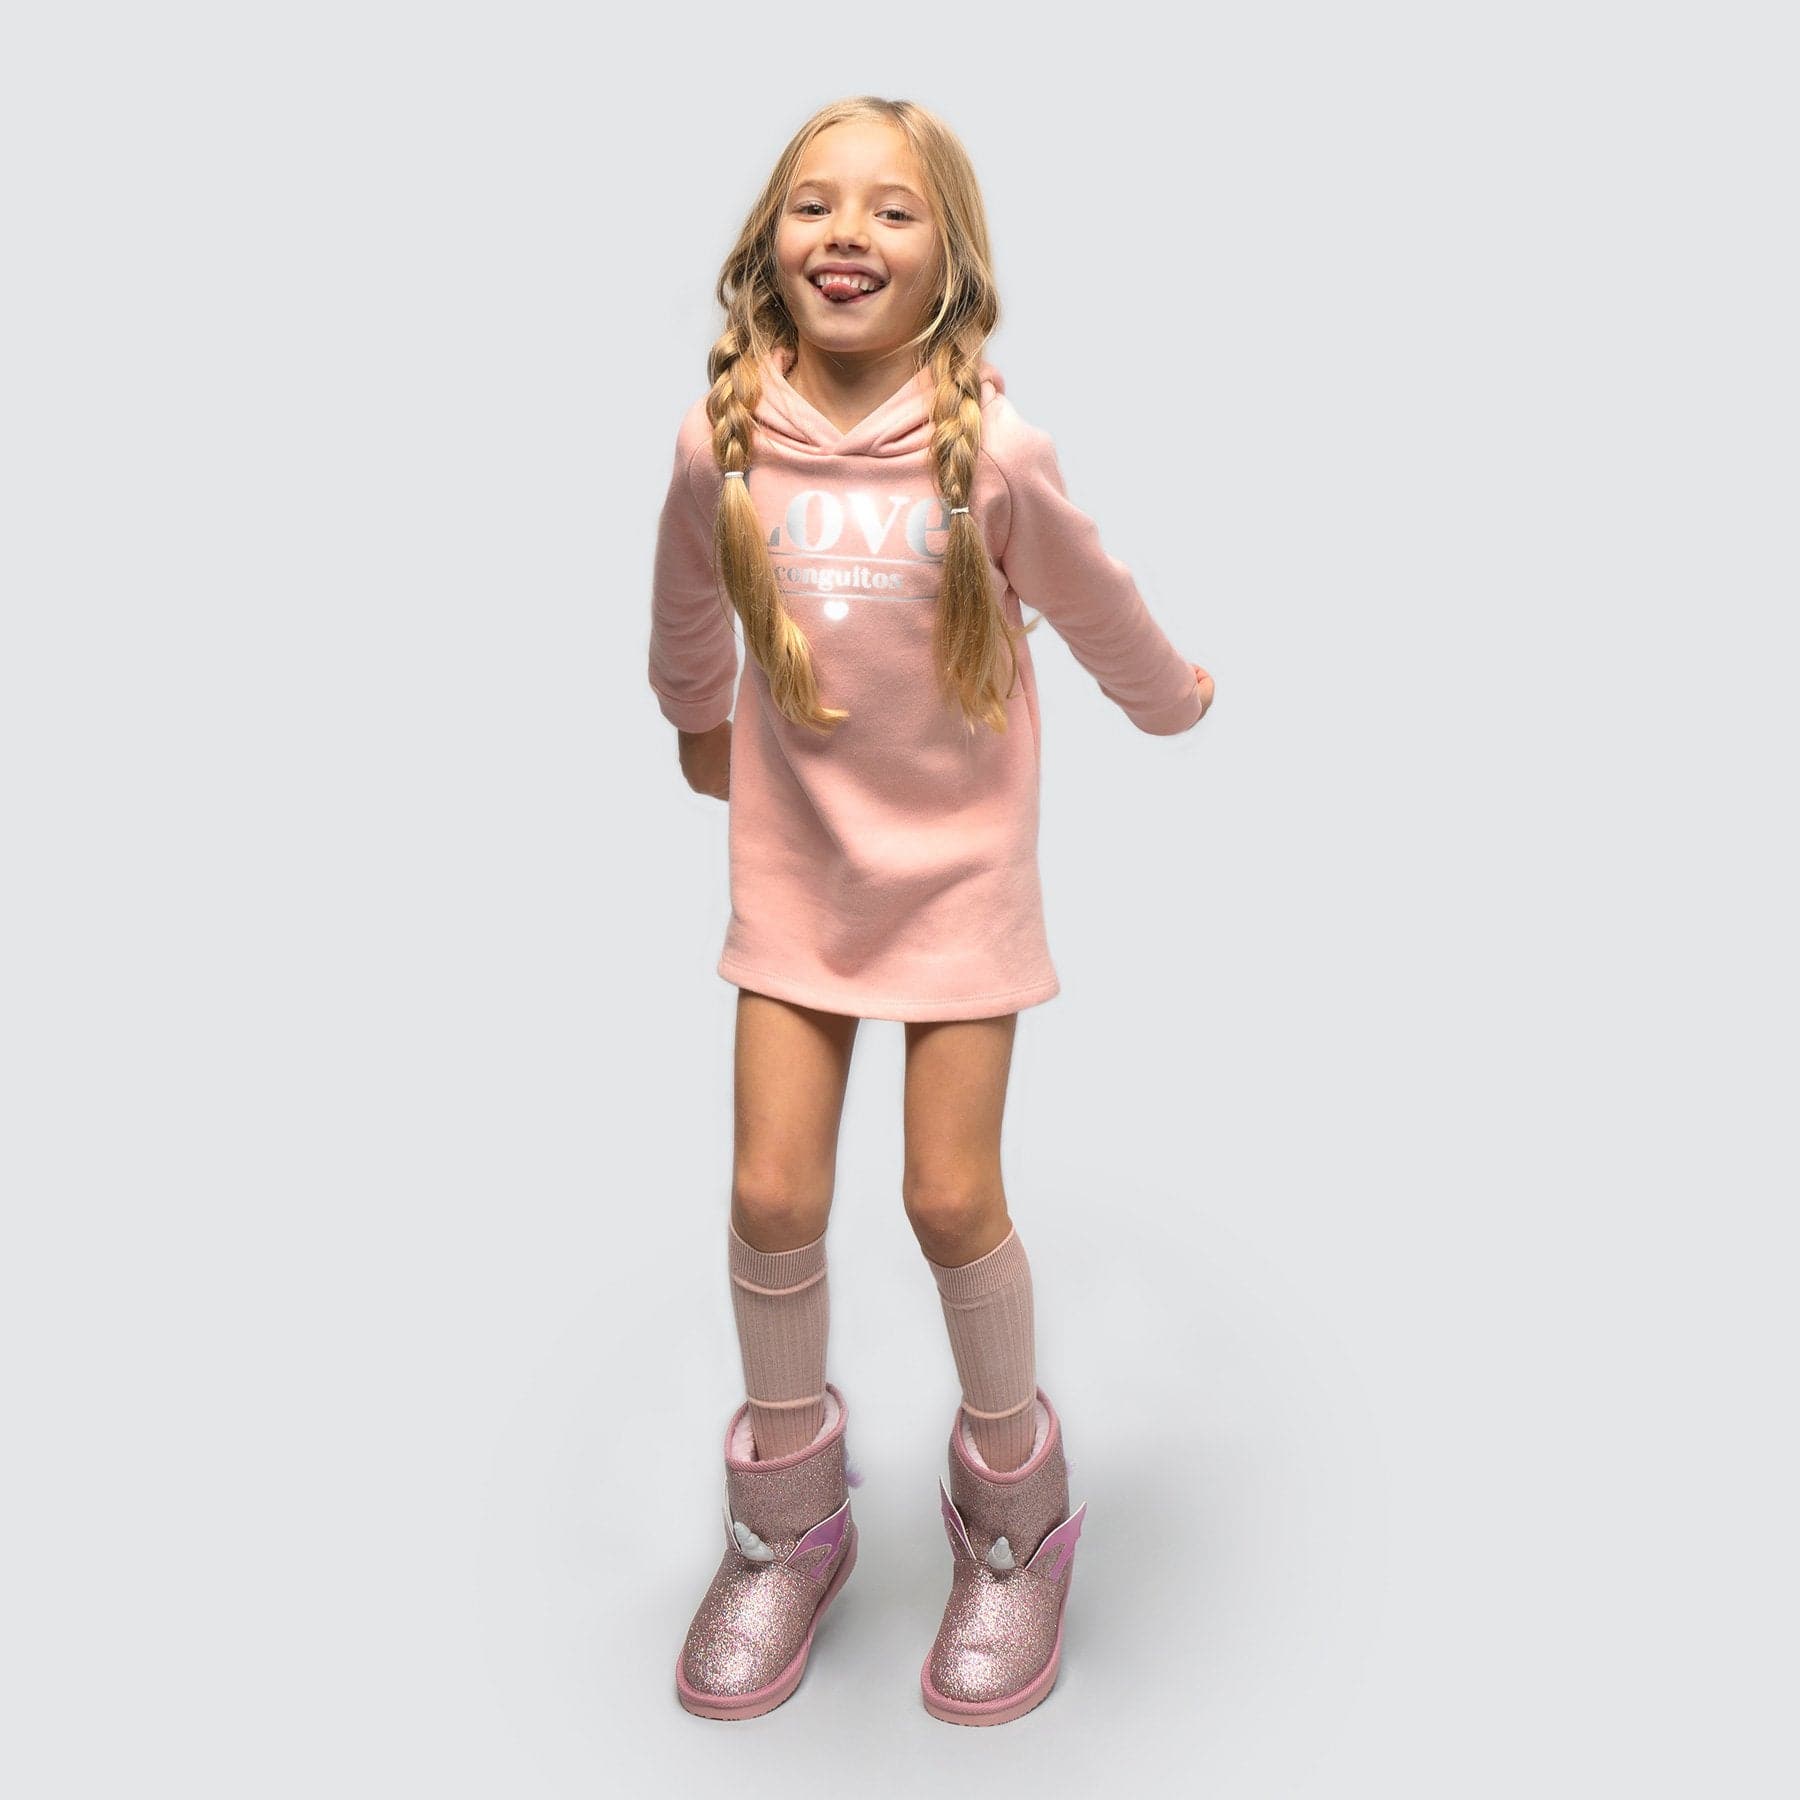 CONGUITOS TEXTIL Clothing Girl's Pink Reflectant Sweatshirt Dress